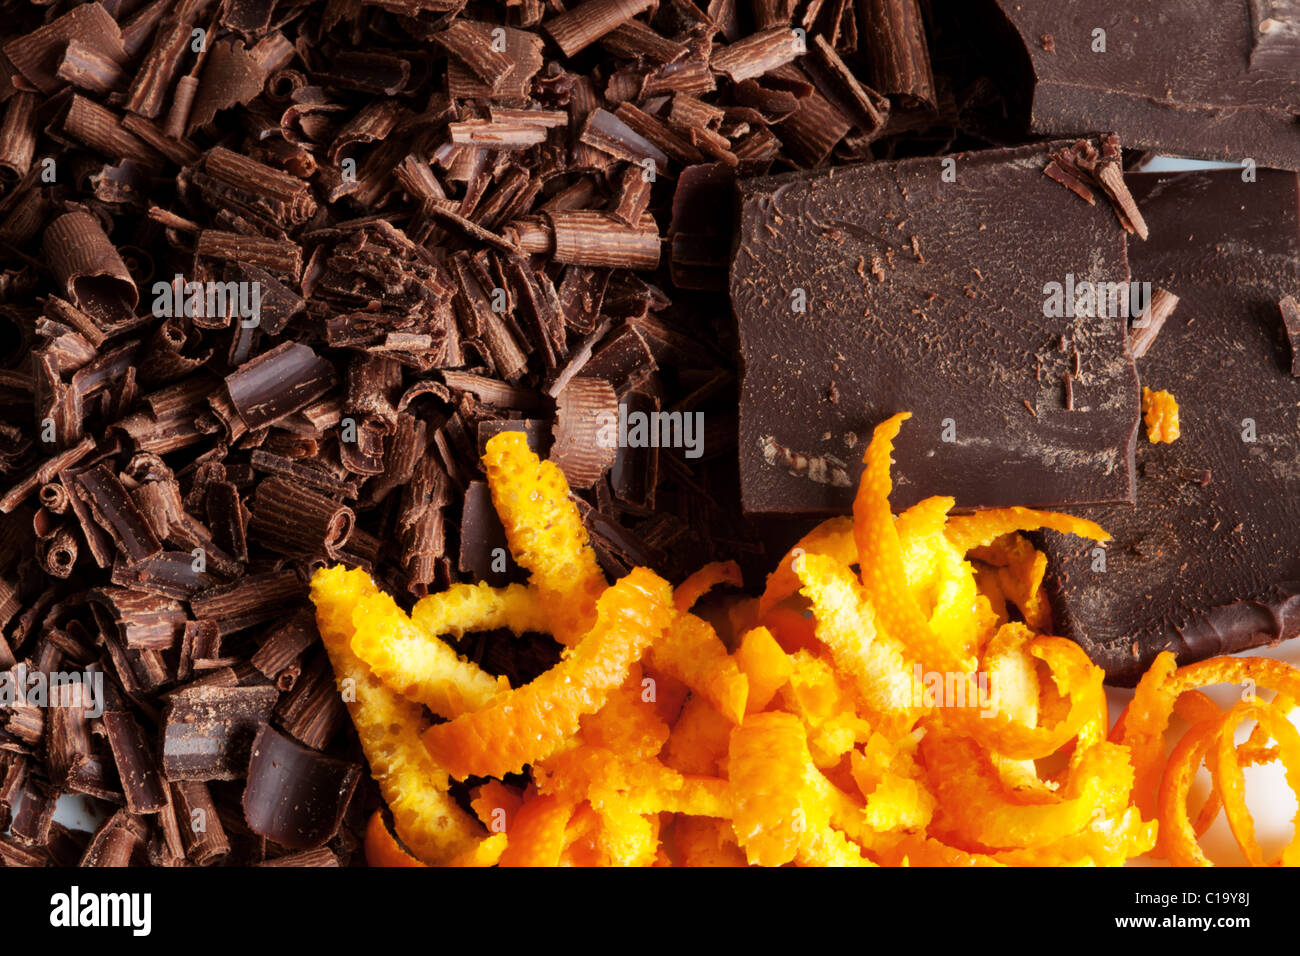 closeup chocolate and orange peel Stock Photo